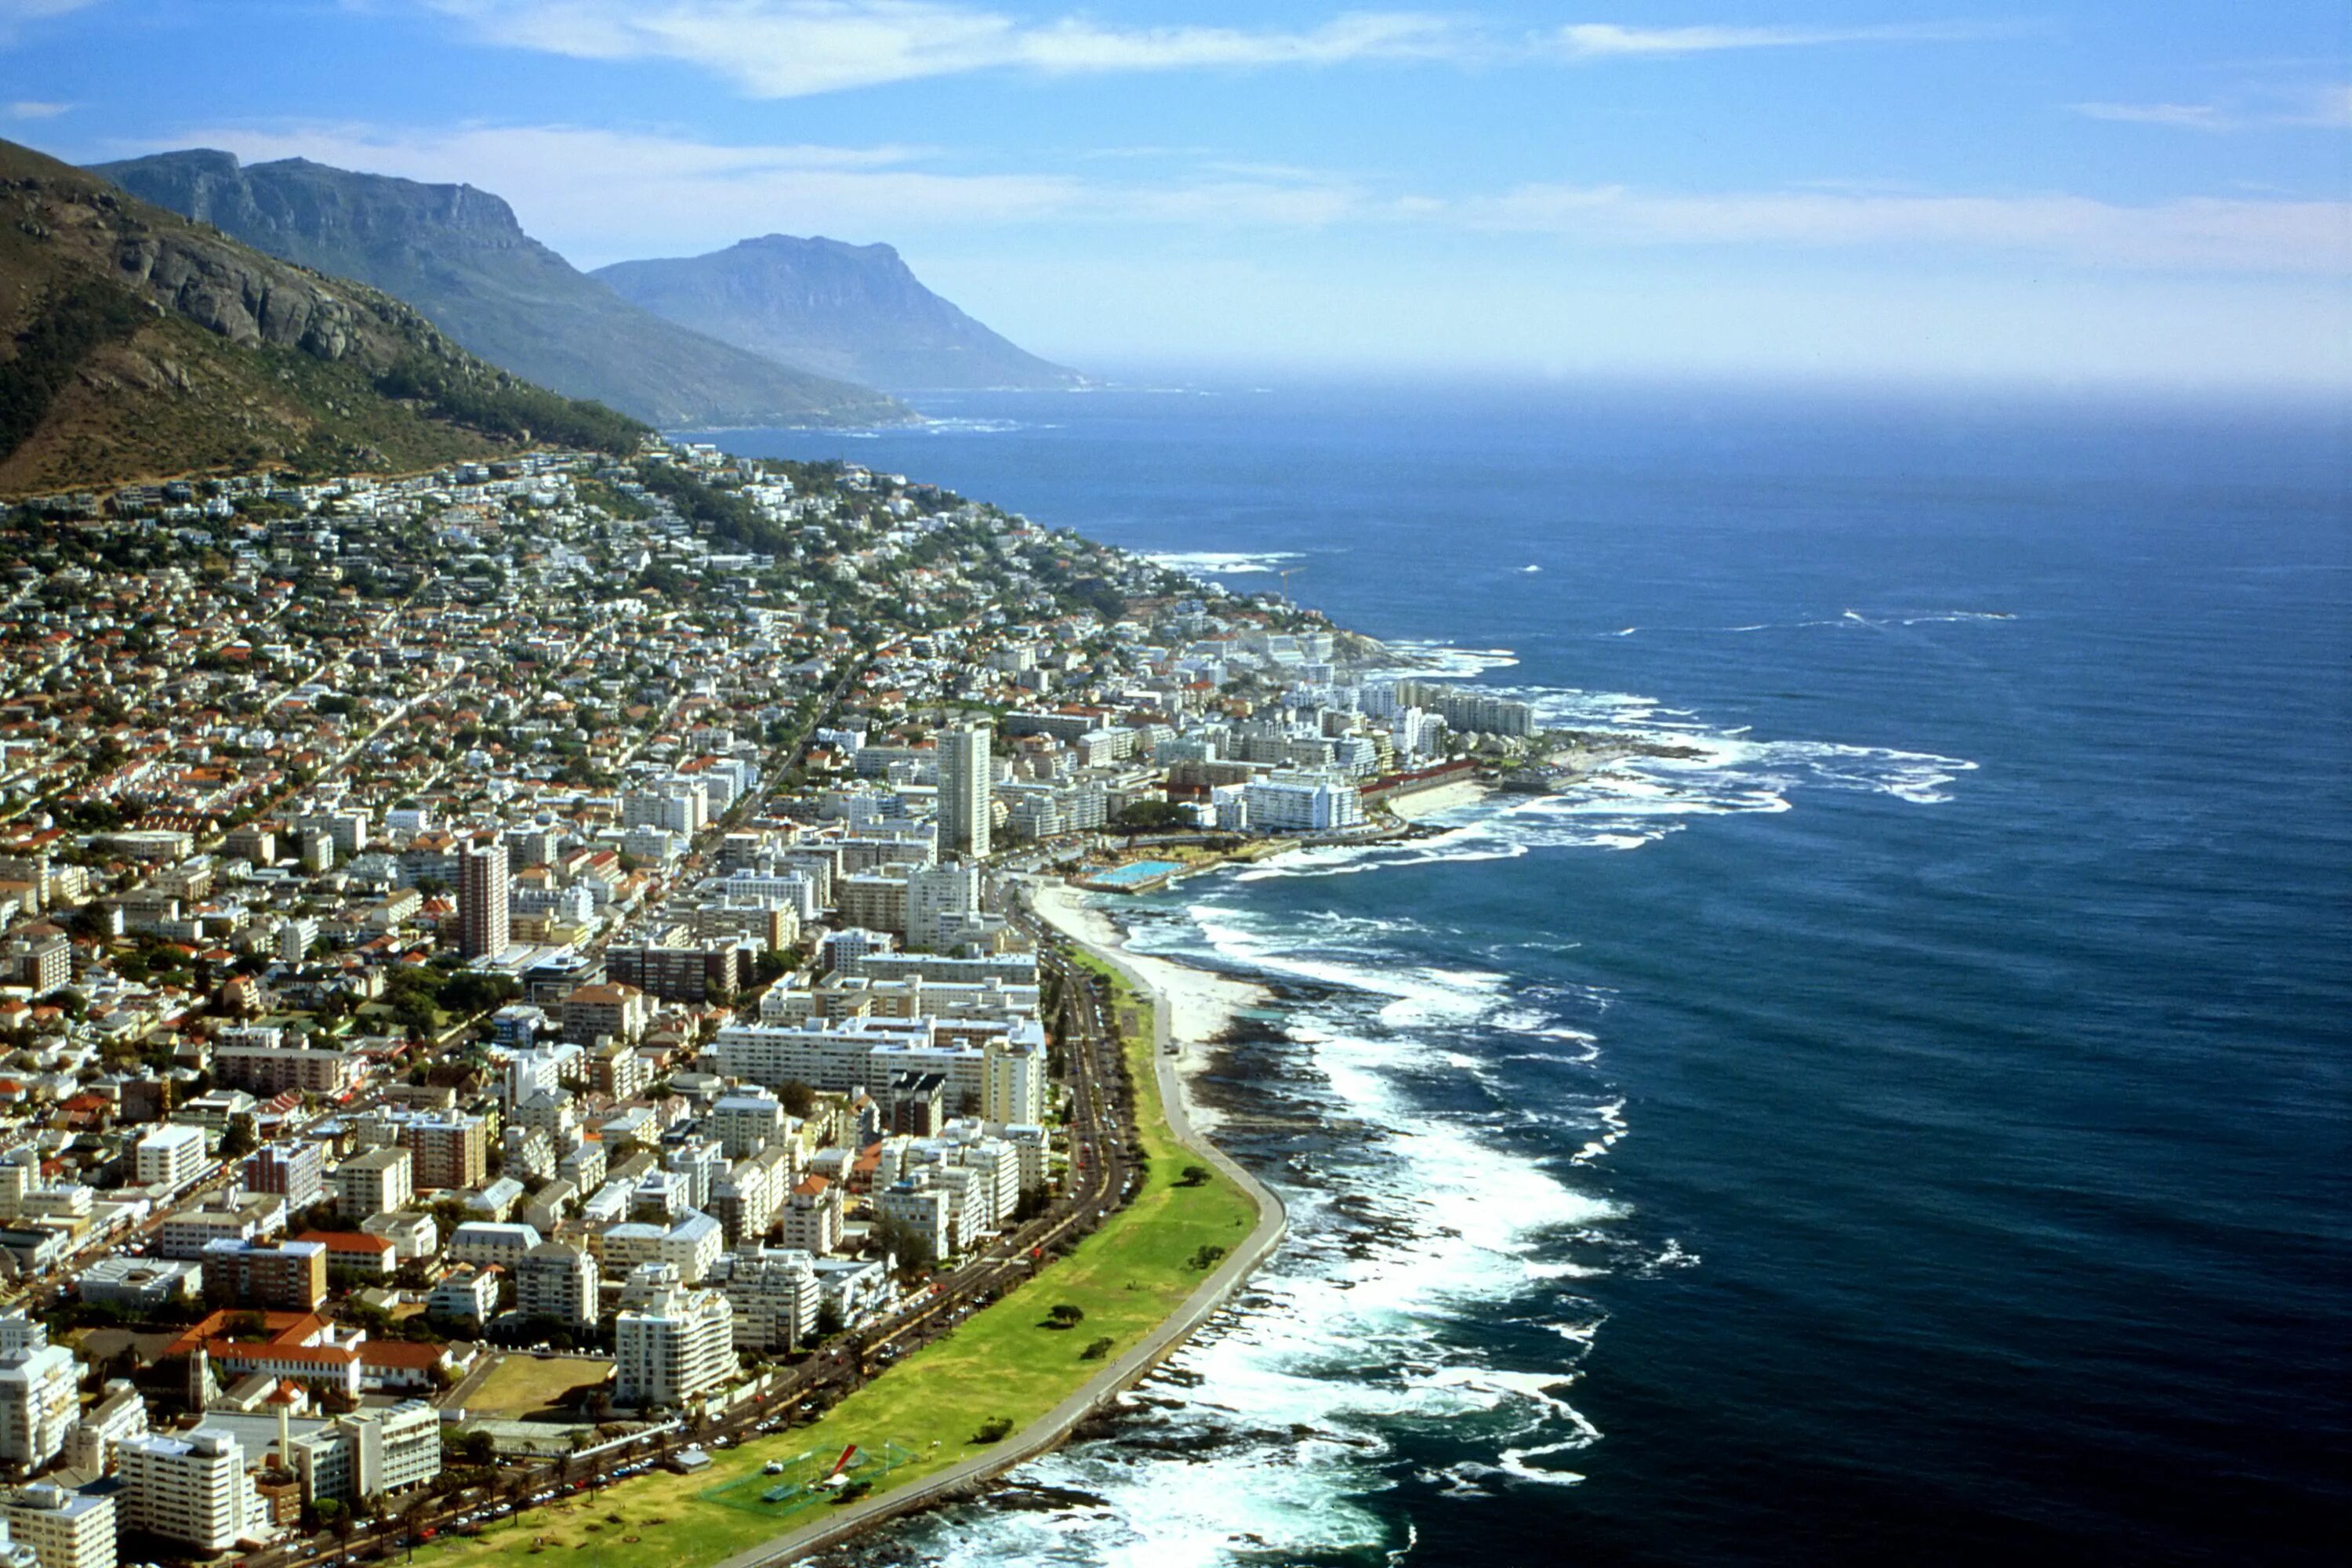 ЮАР Кейптаун. Южно-Африканская Республика (ЮАР). Африка город Кейптаун. Южная Африканская Республика города Кейптауна. 5 стран на юге